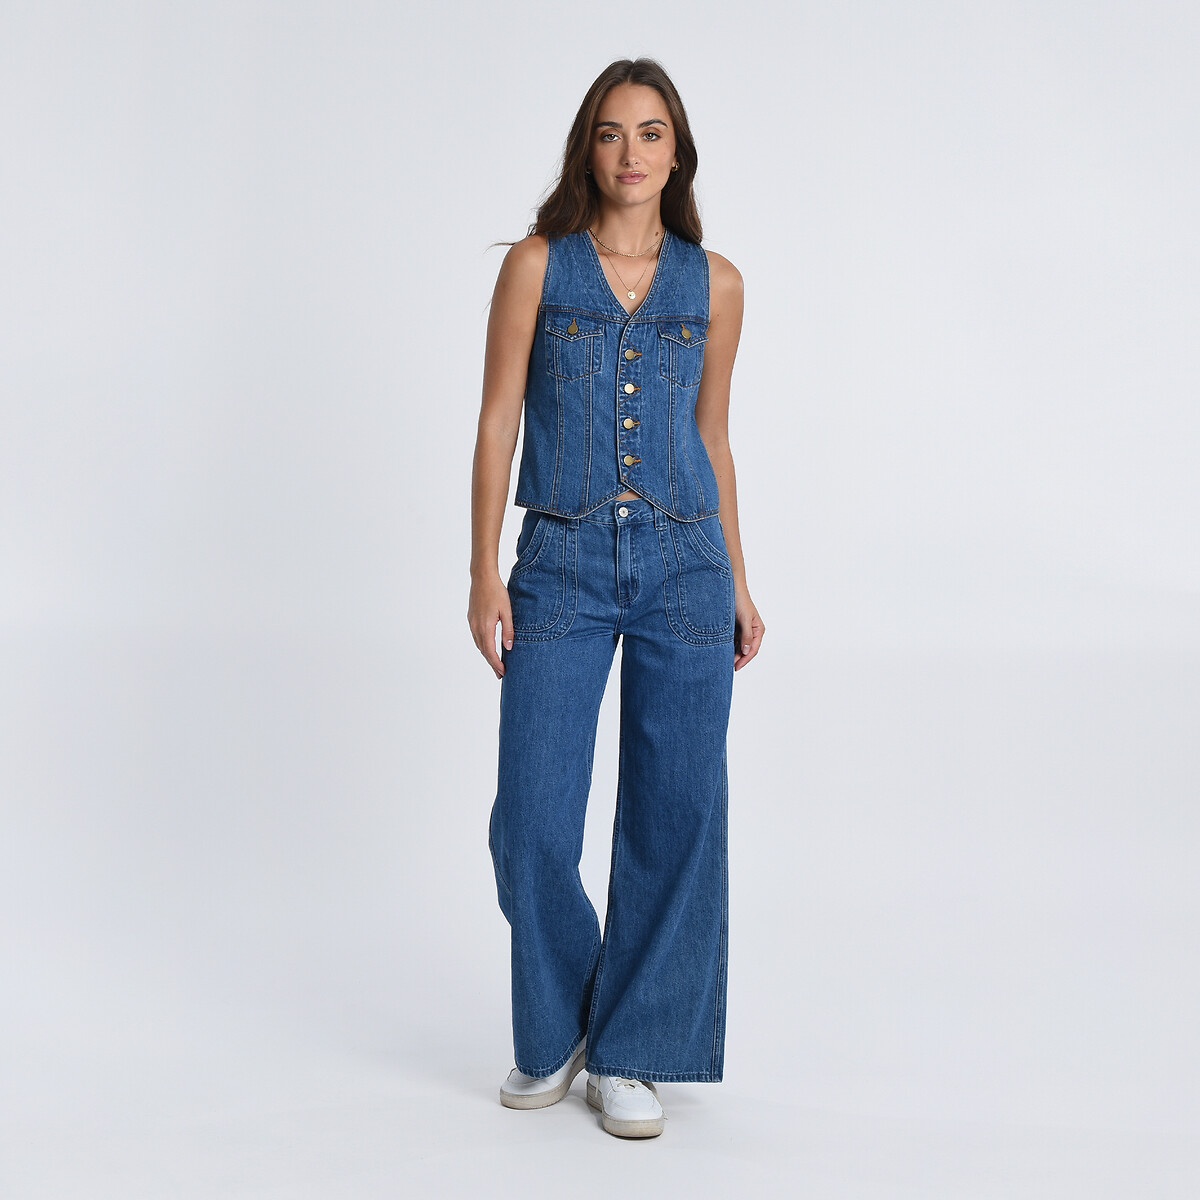 Жакет Без рукавов из джинсовой ткани XS синий LaRedoute, размер XS - фото 4